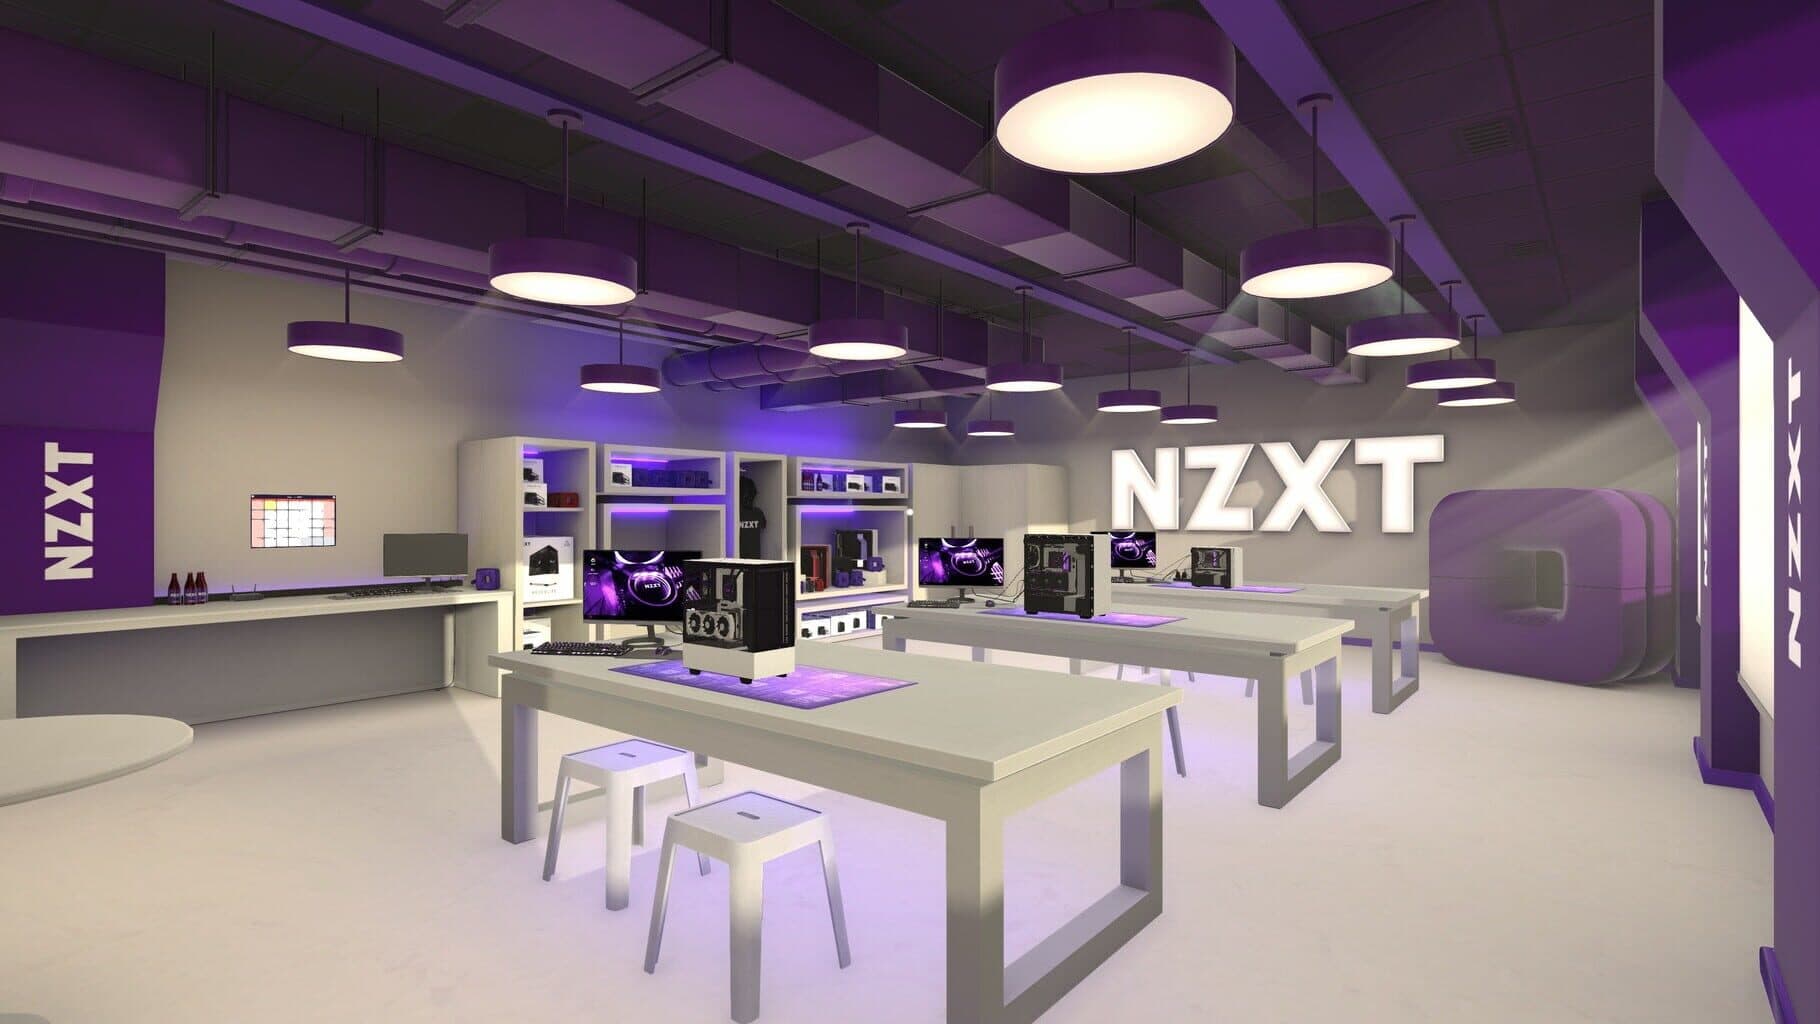 PC Building Simulator: Nzxt Workshop Image